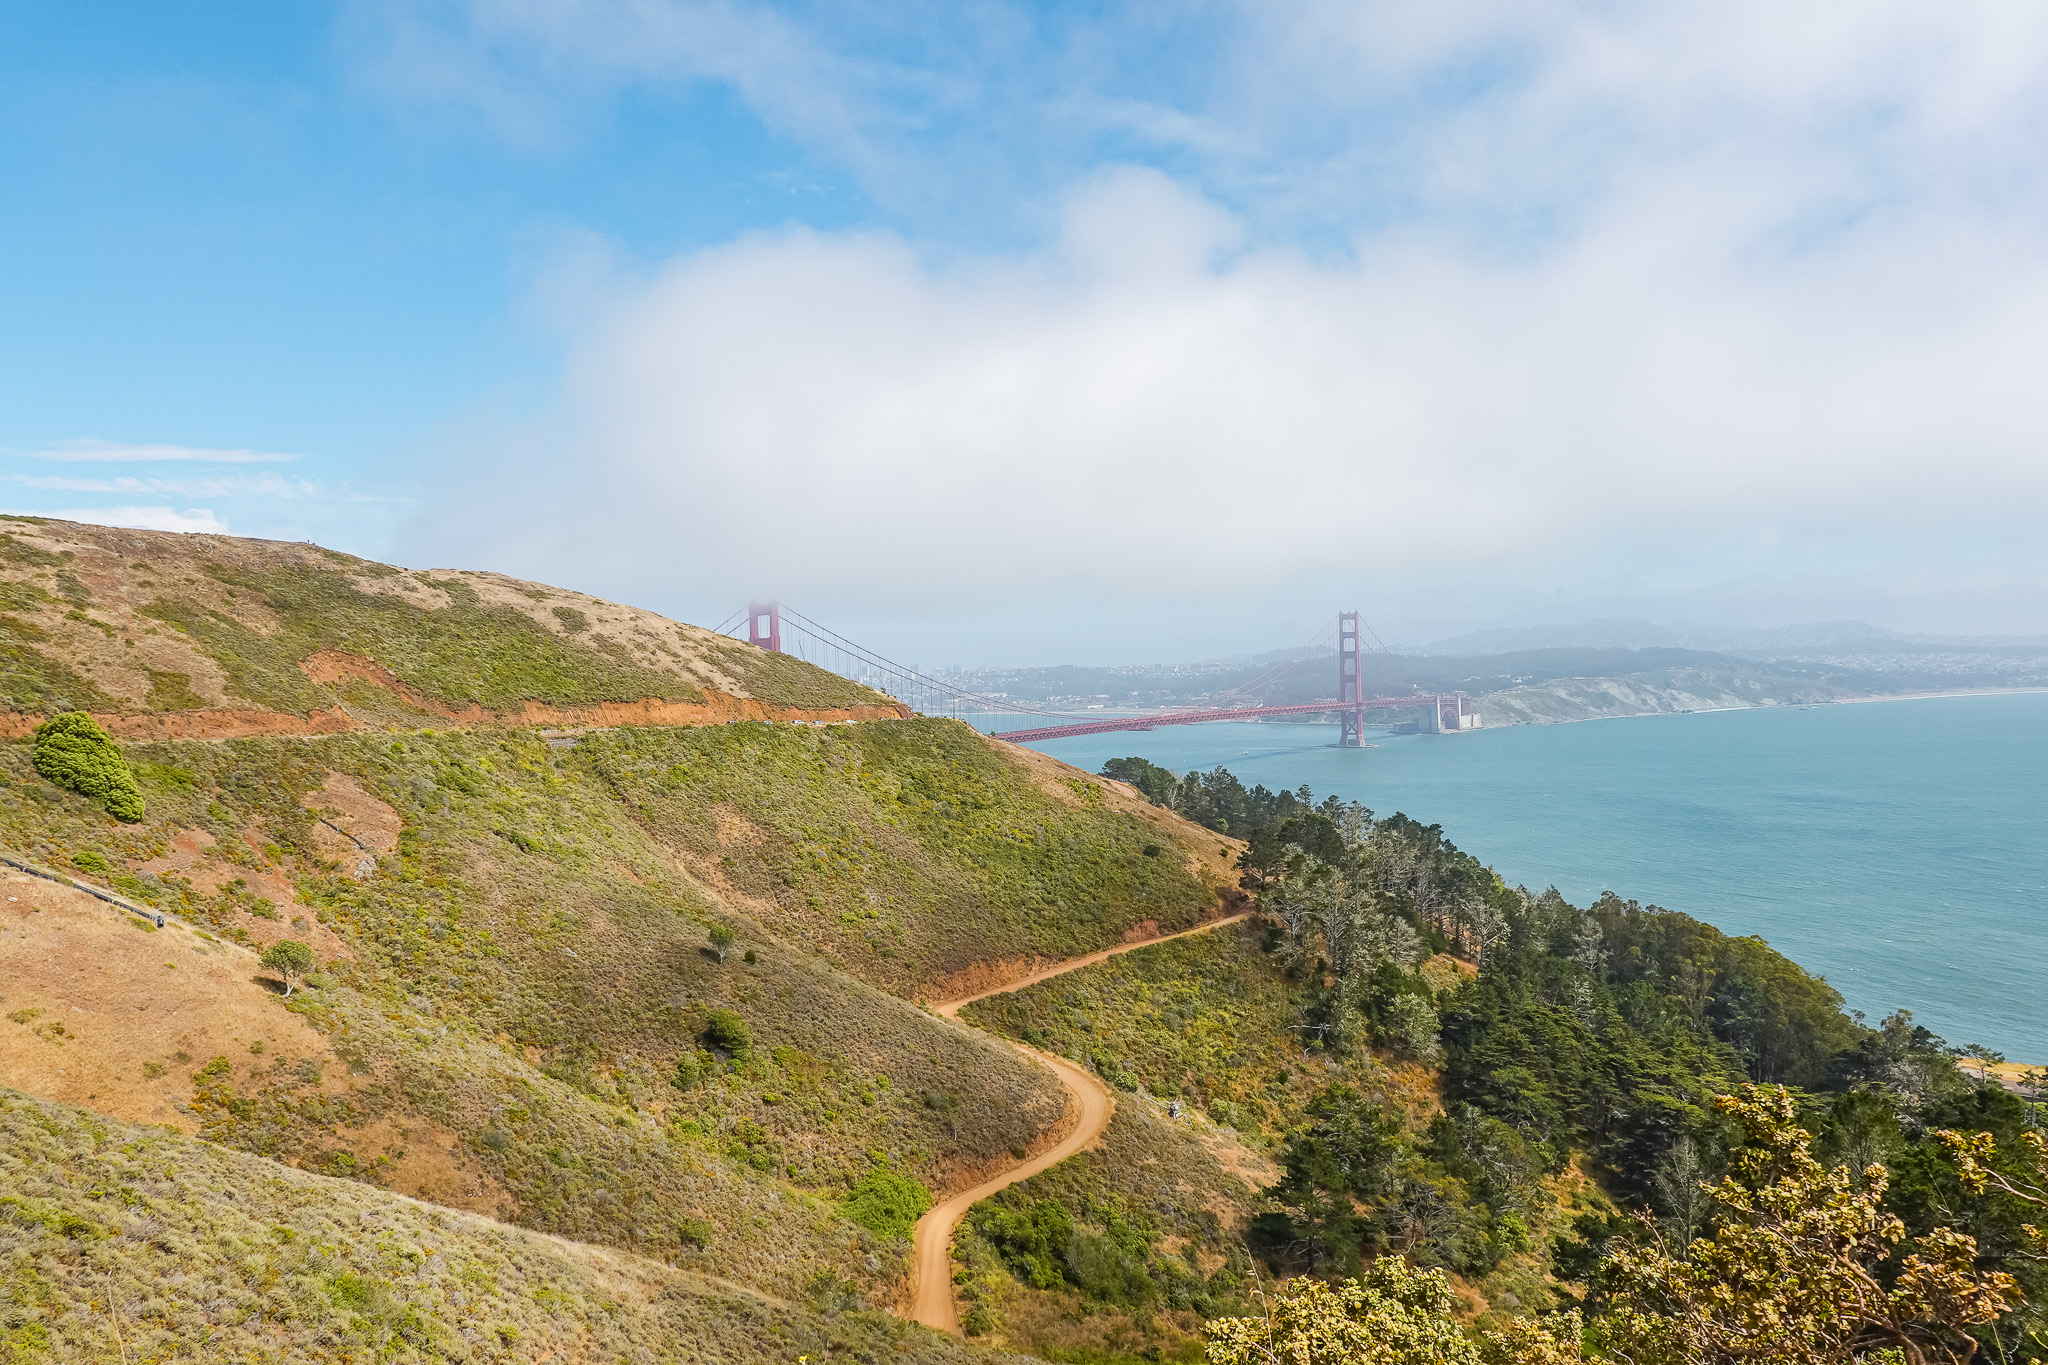 Epic views in San Francisco of Golden Gate Bridge